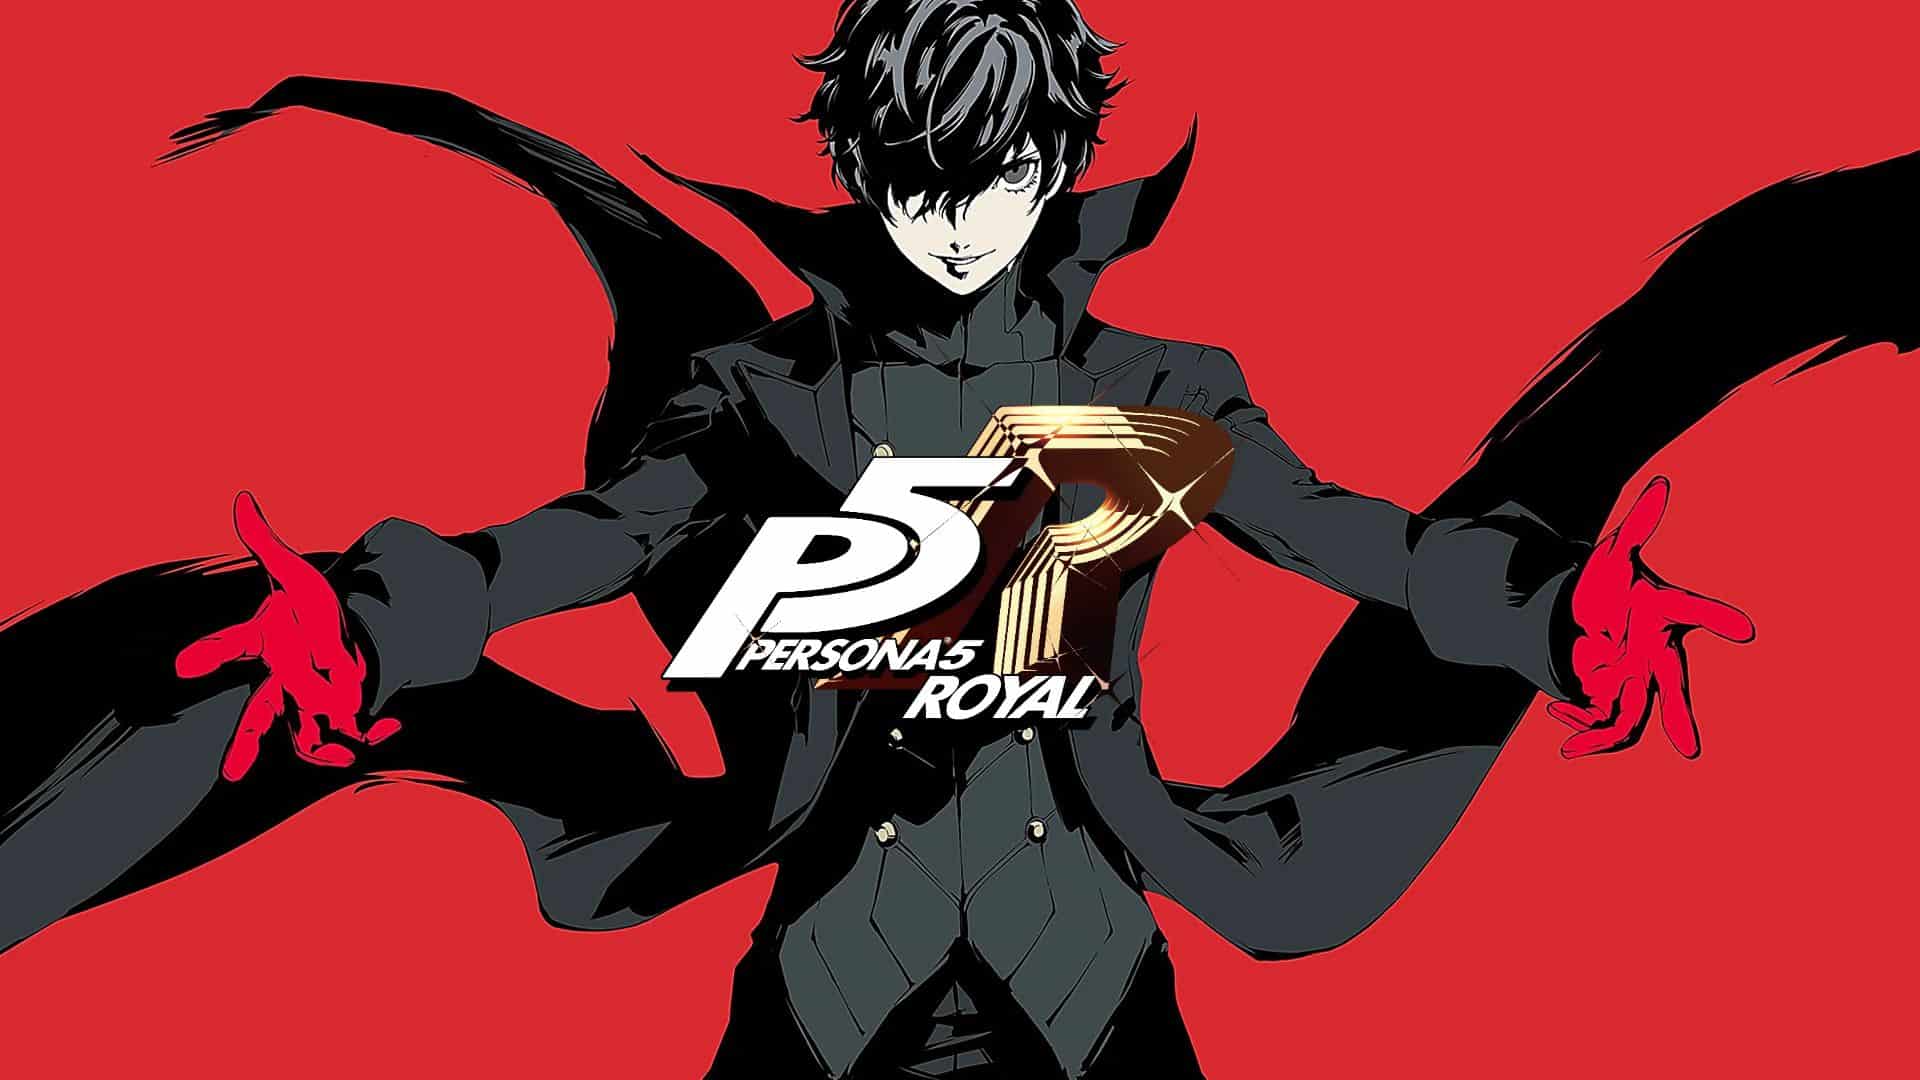 Persona 5 Royal News, Reviews and Information